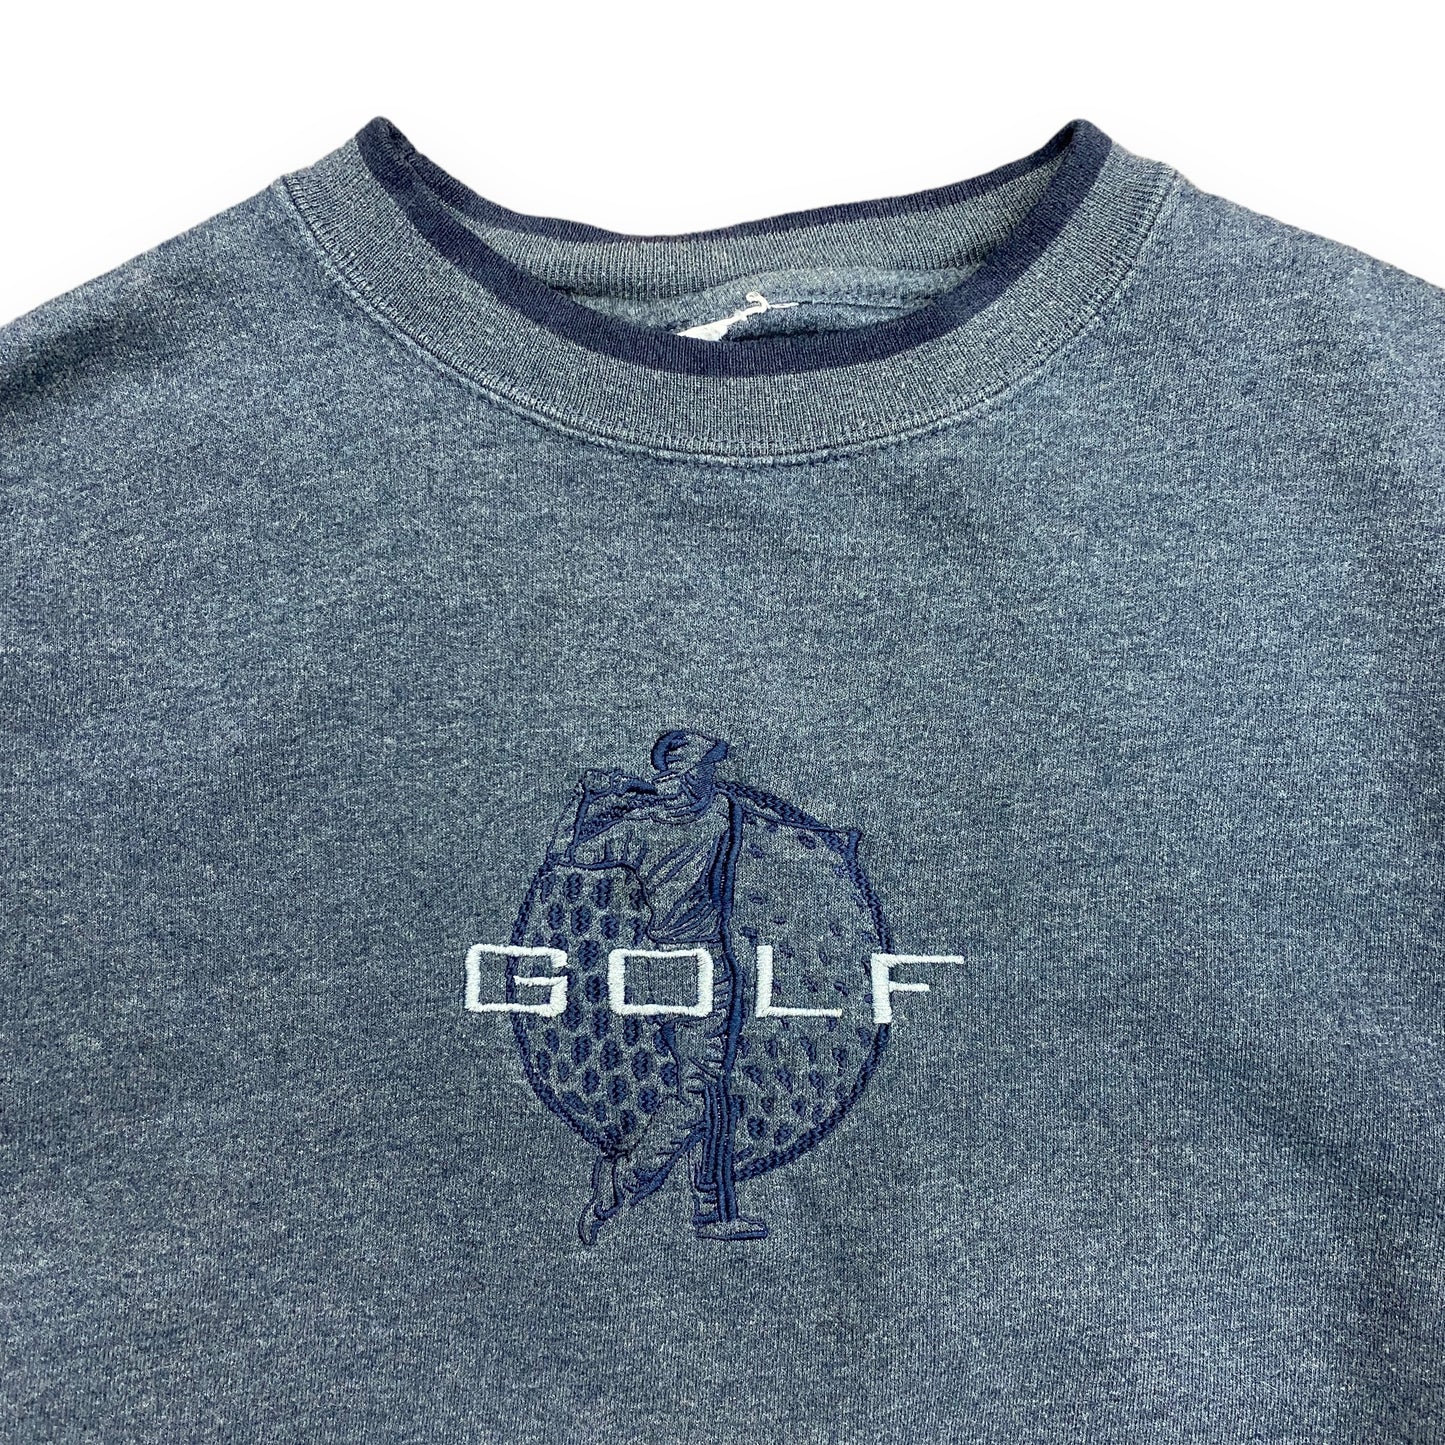 1990s Embroidered "Golf" Crewneck Sweatshirt - Size Large